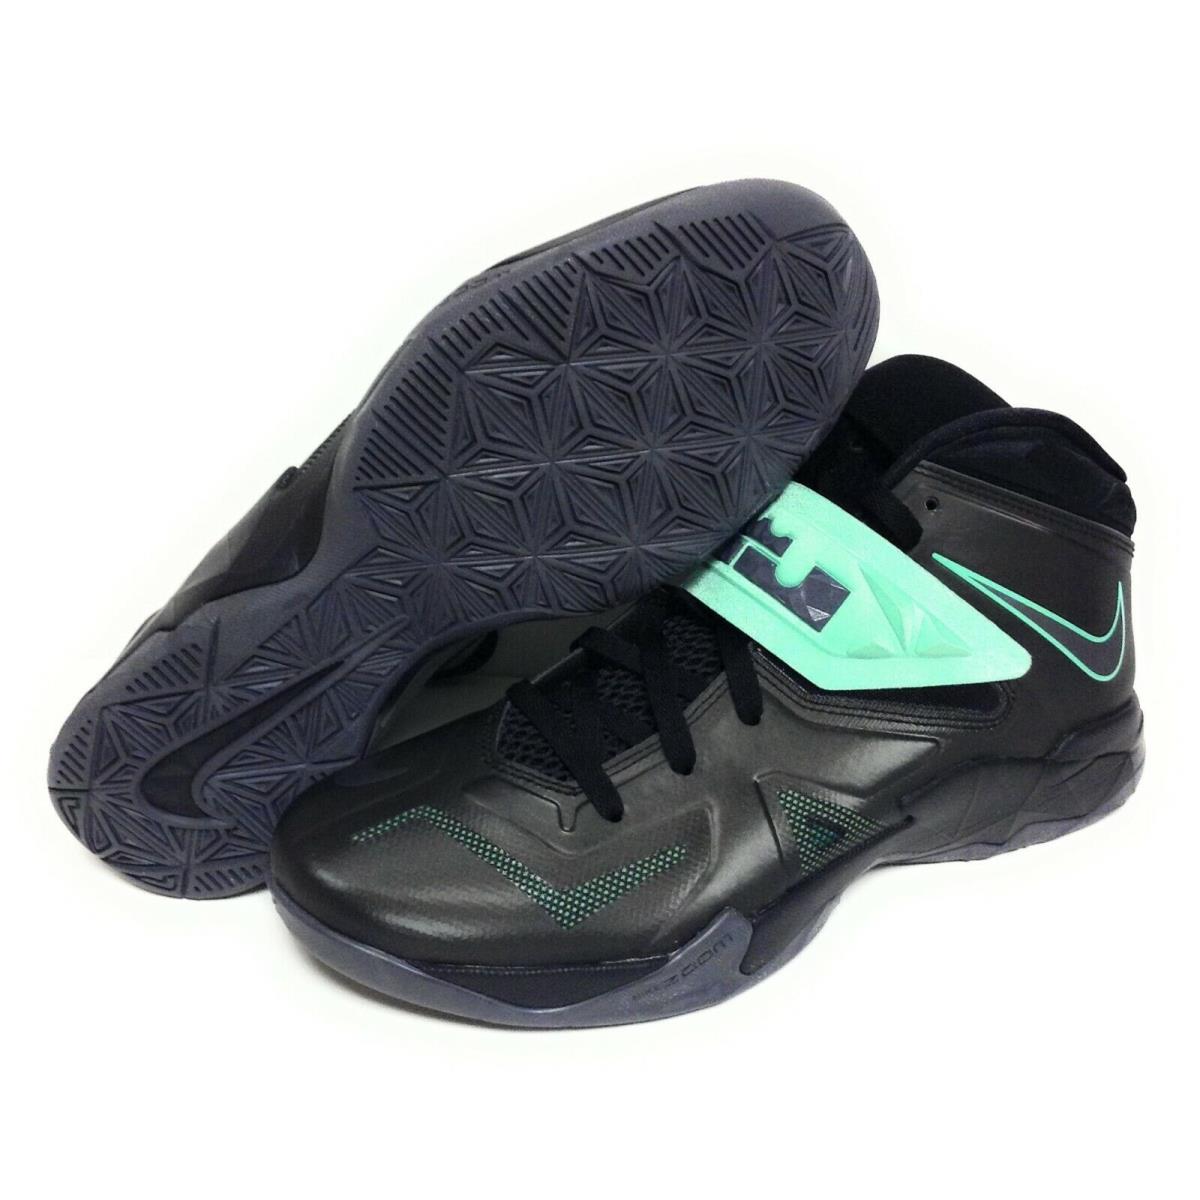 Mens Nike Lebron Zoom Soldier Vii 599264 002 Black Green Glow Sneakers Shoes